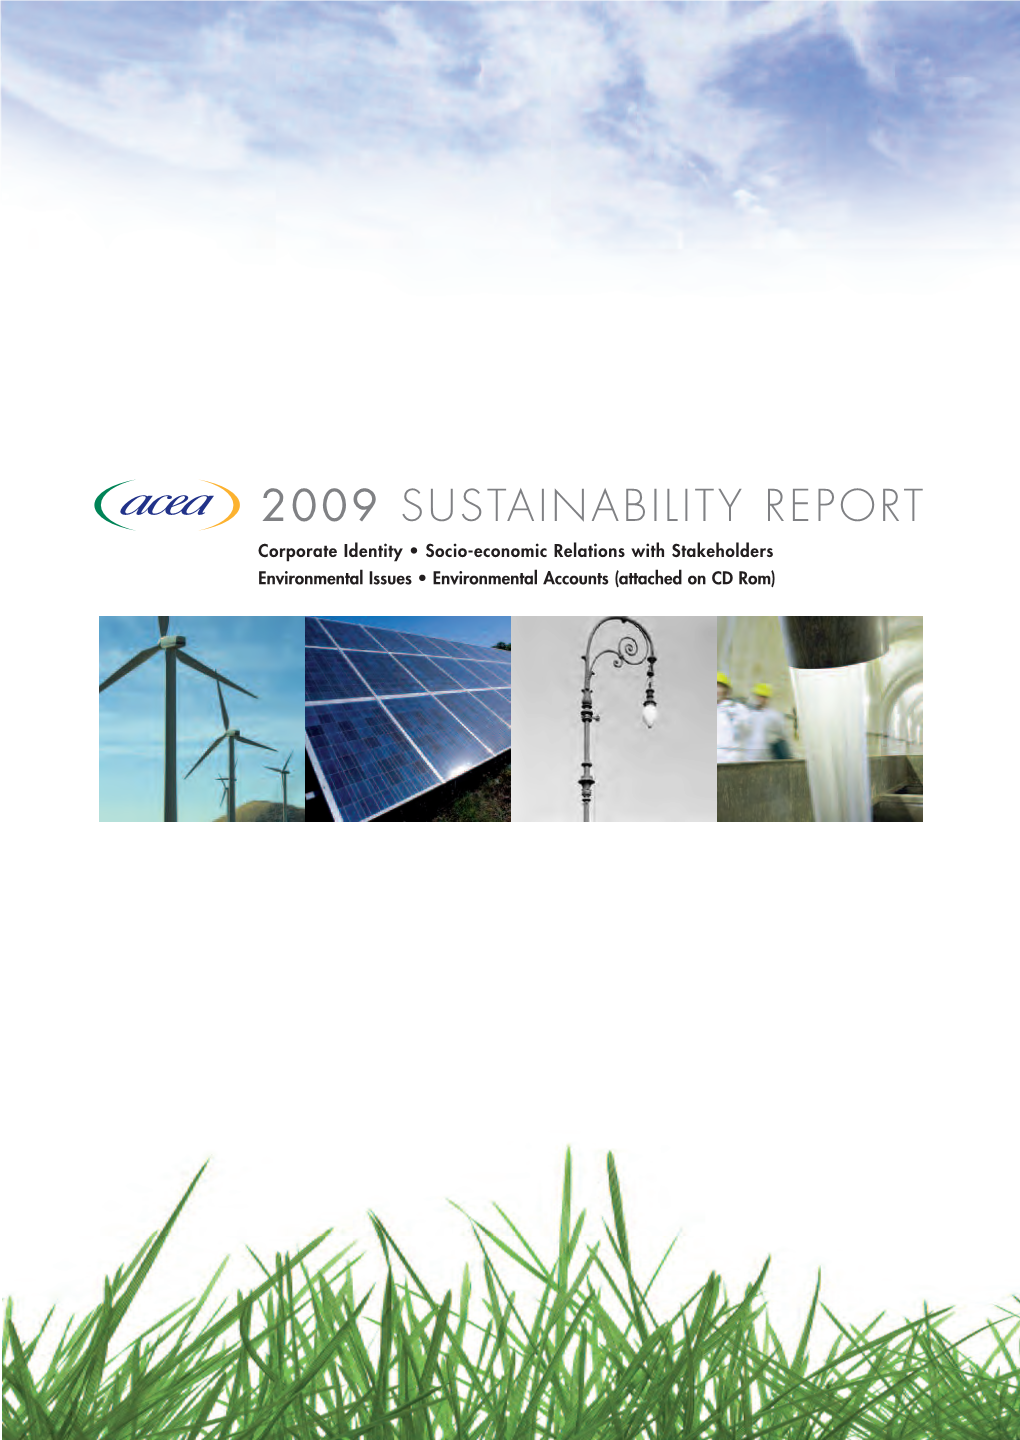 2009 Sustainability Report